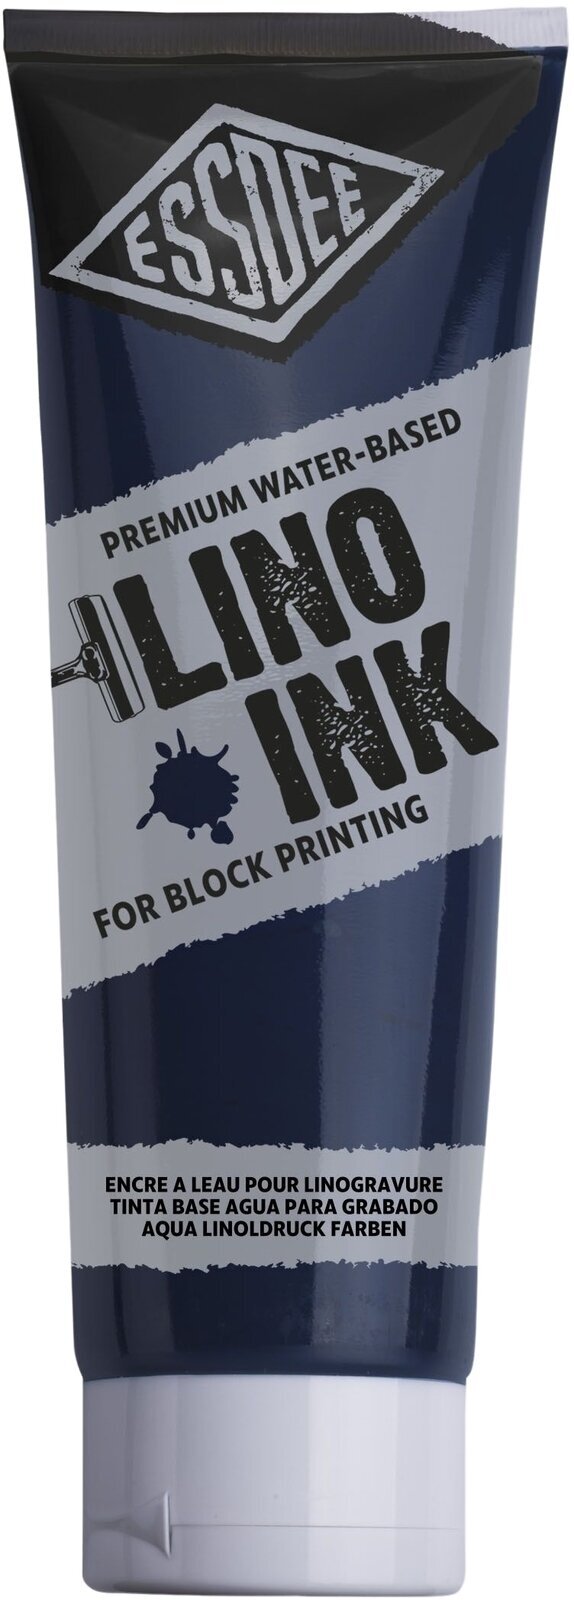 Farbe für Linolschnitt Essdee Block Printing Ink Farbe für Linolschnitt Prussian Blue 300 ml